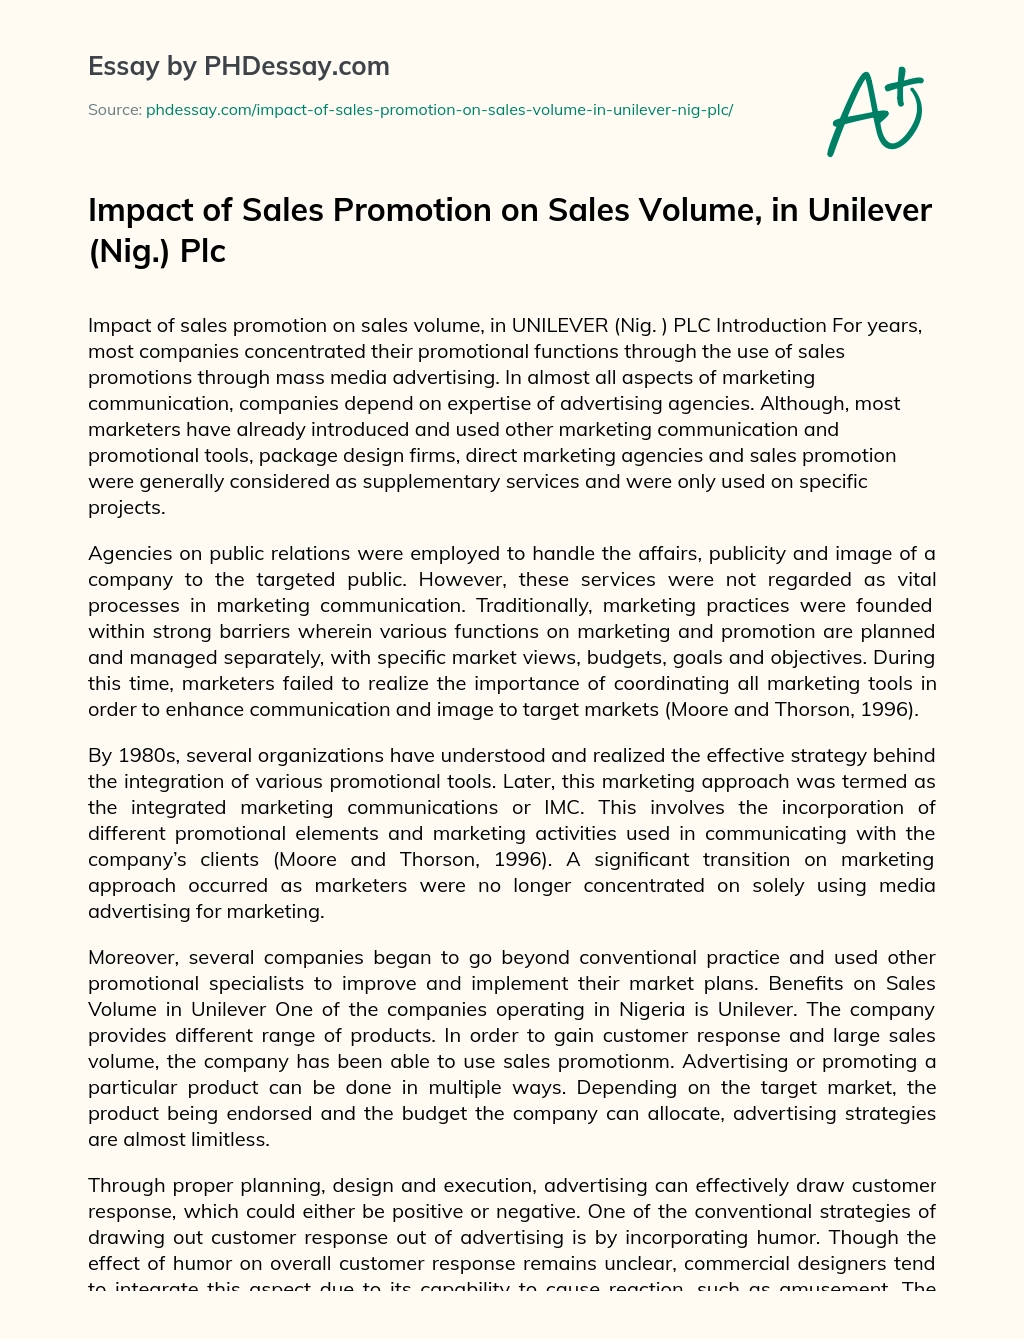 Impact of Sales Promotion on Sales Volume, in Unilever (Nig.) Plc essay